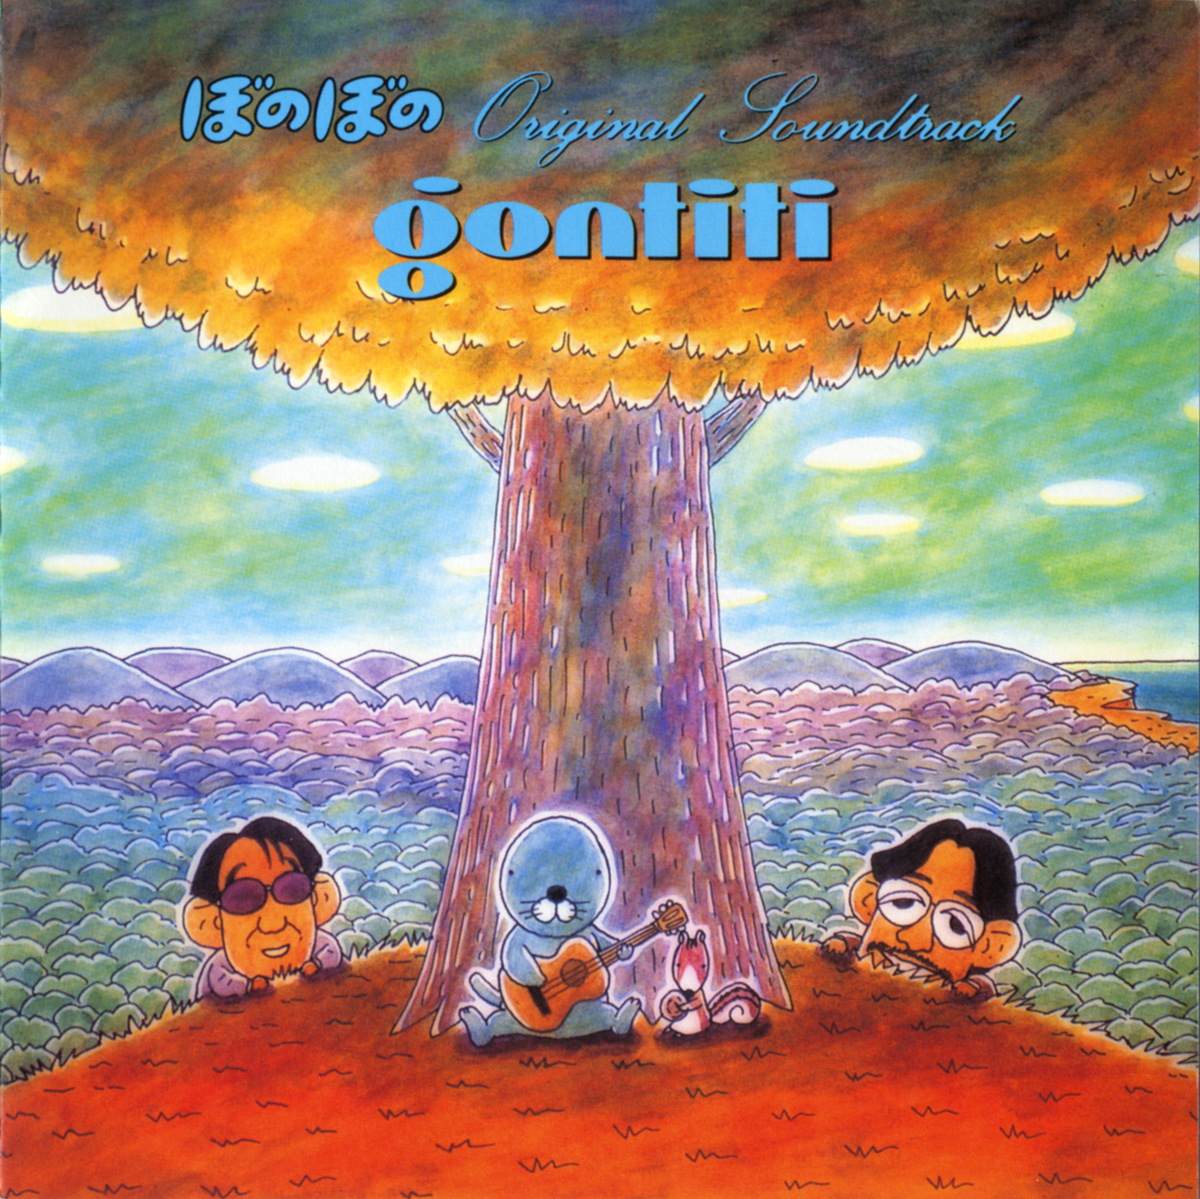 Gontiti “ぼのぼの Original Soundtrack”